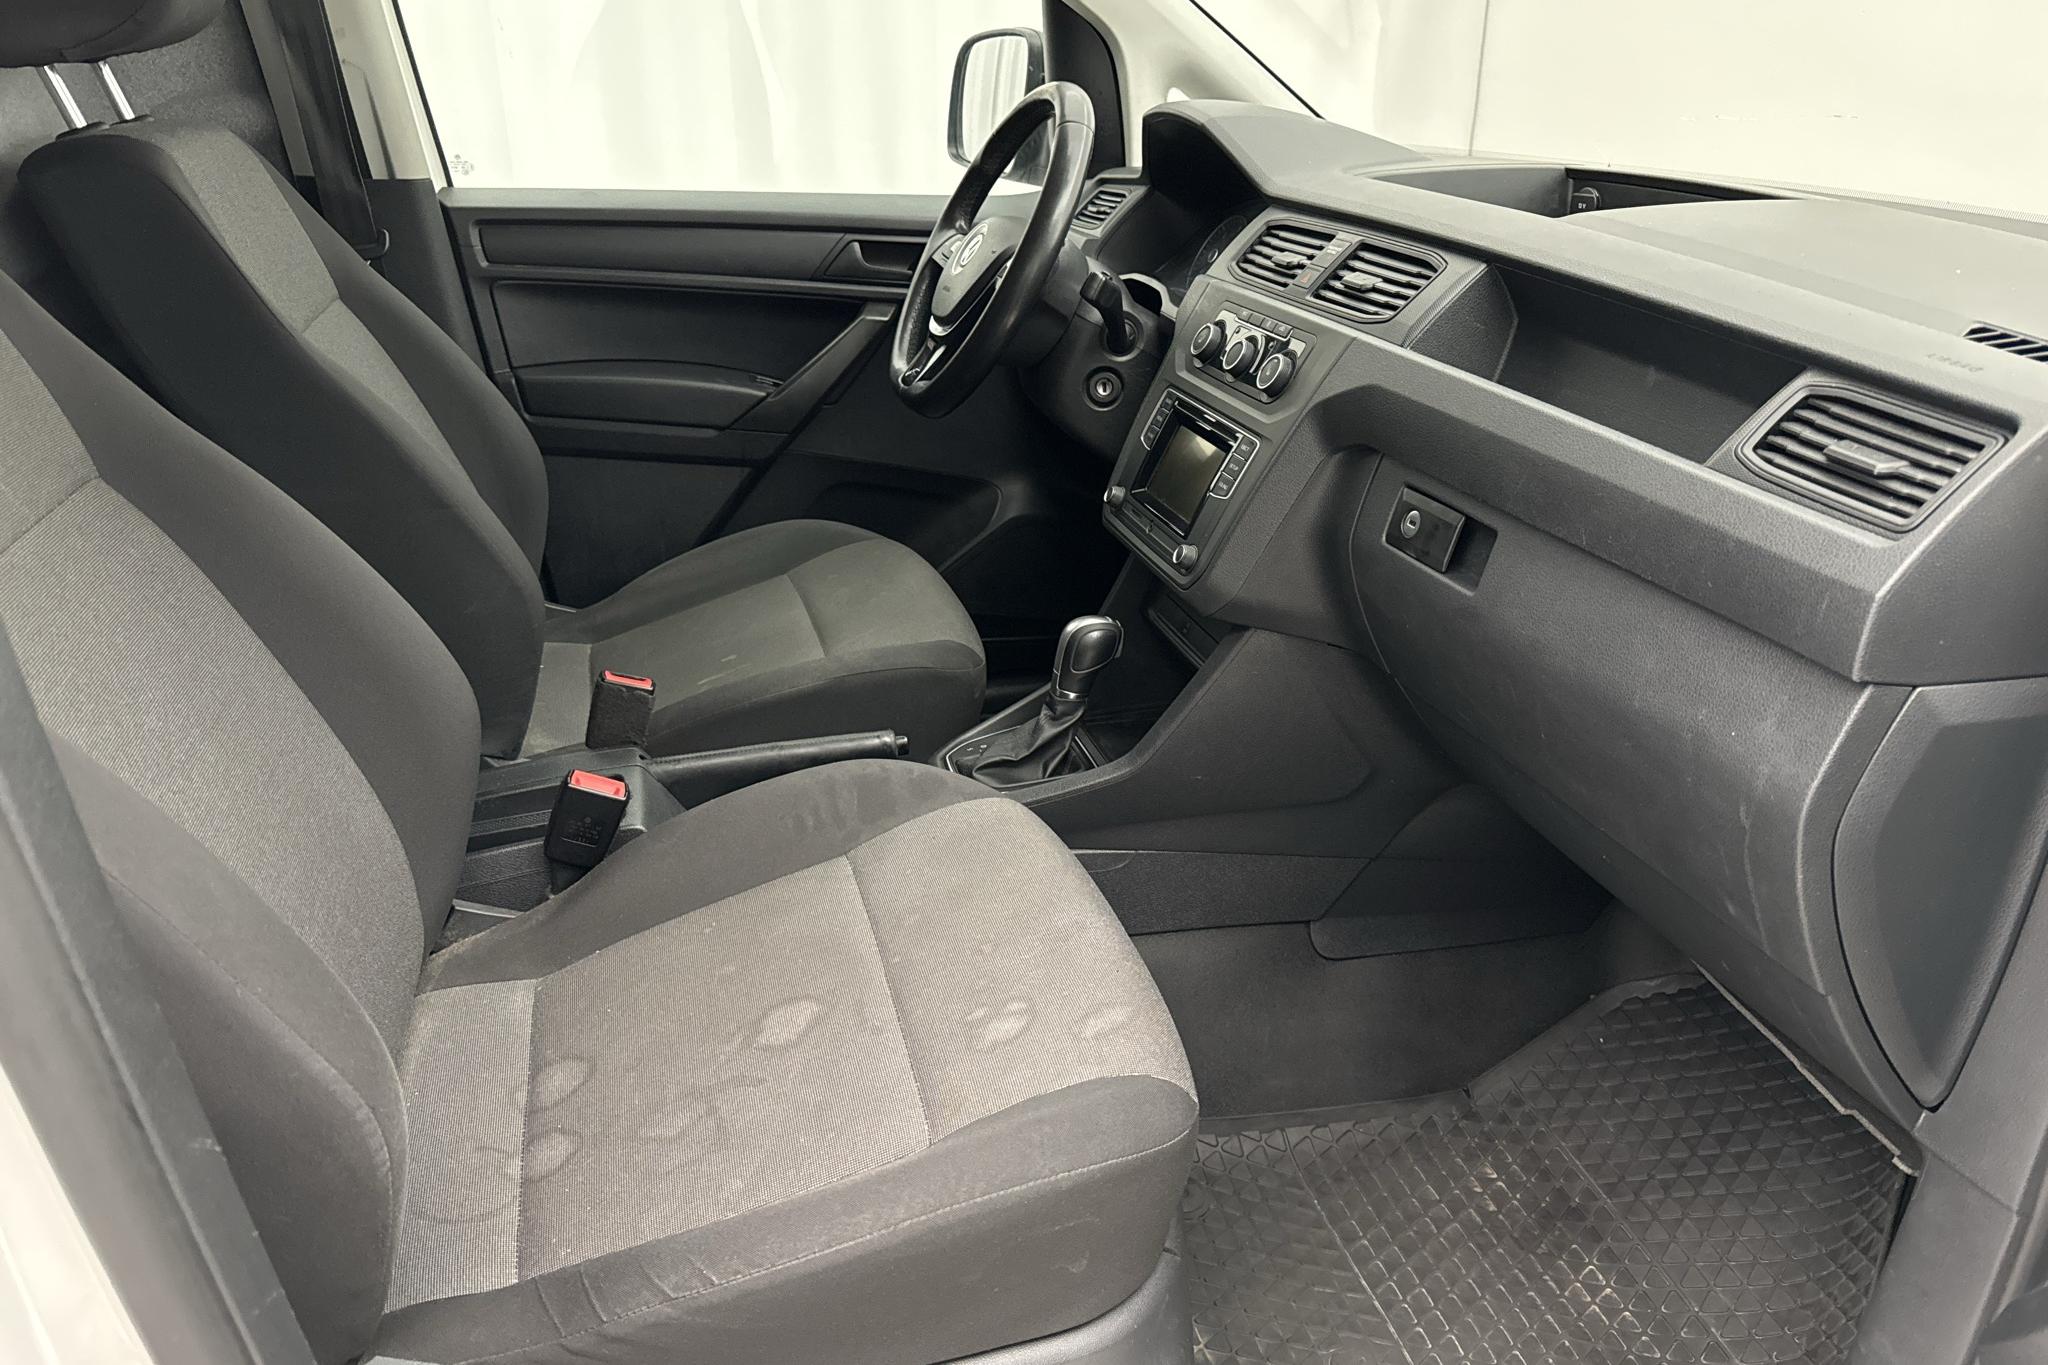 VW Caddy 2.0 TDI (102hk) - 93 830 km - Automatic - white - 2018